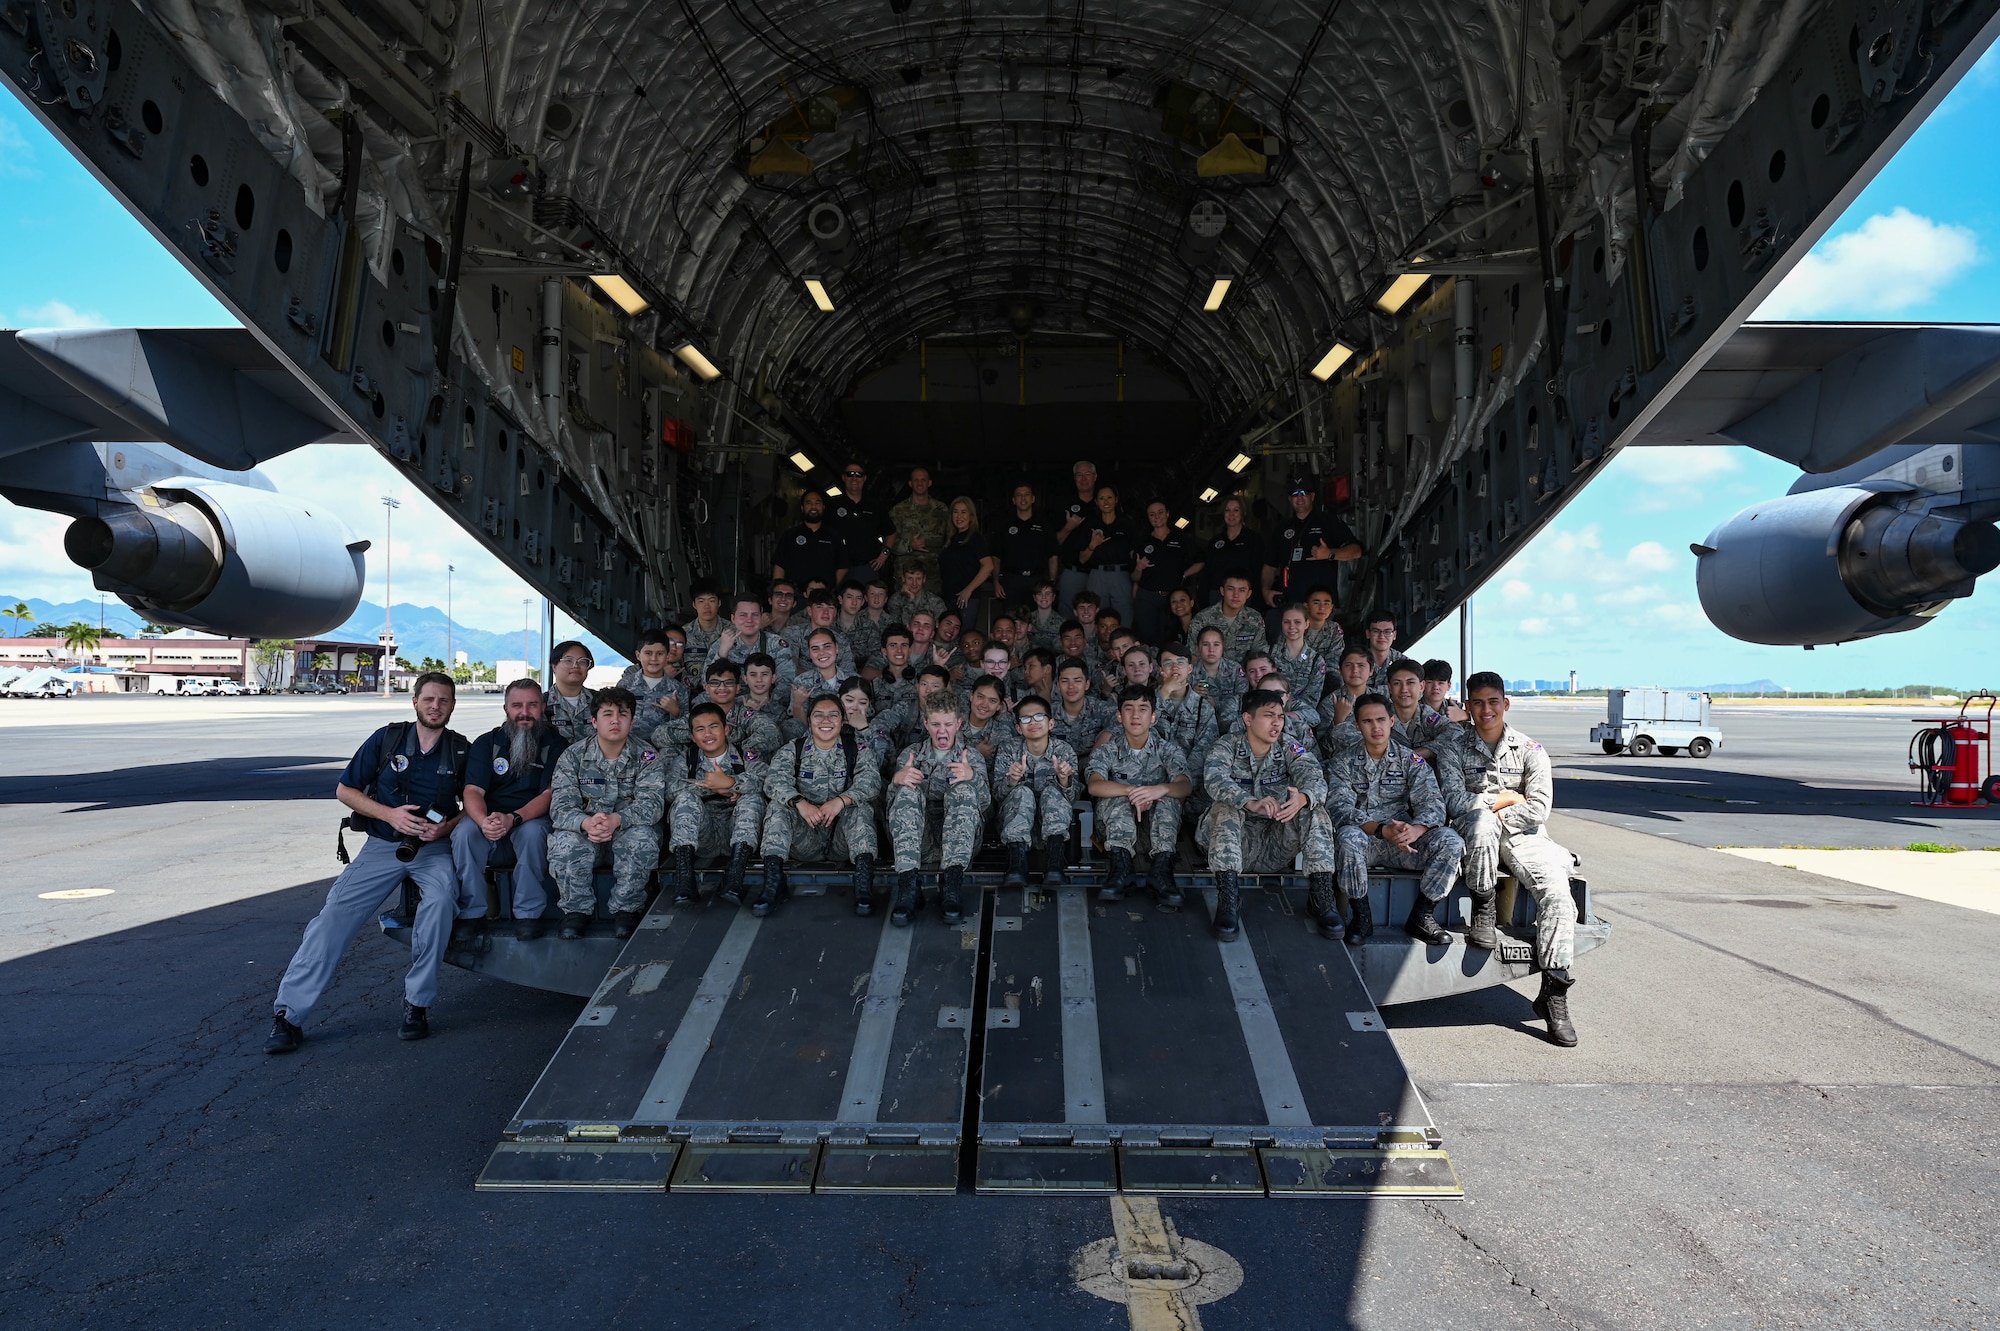 Civil Air Patrol Cadets and Senior Civil Air Patrol members take a group photo inside of an aircraft.